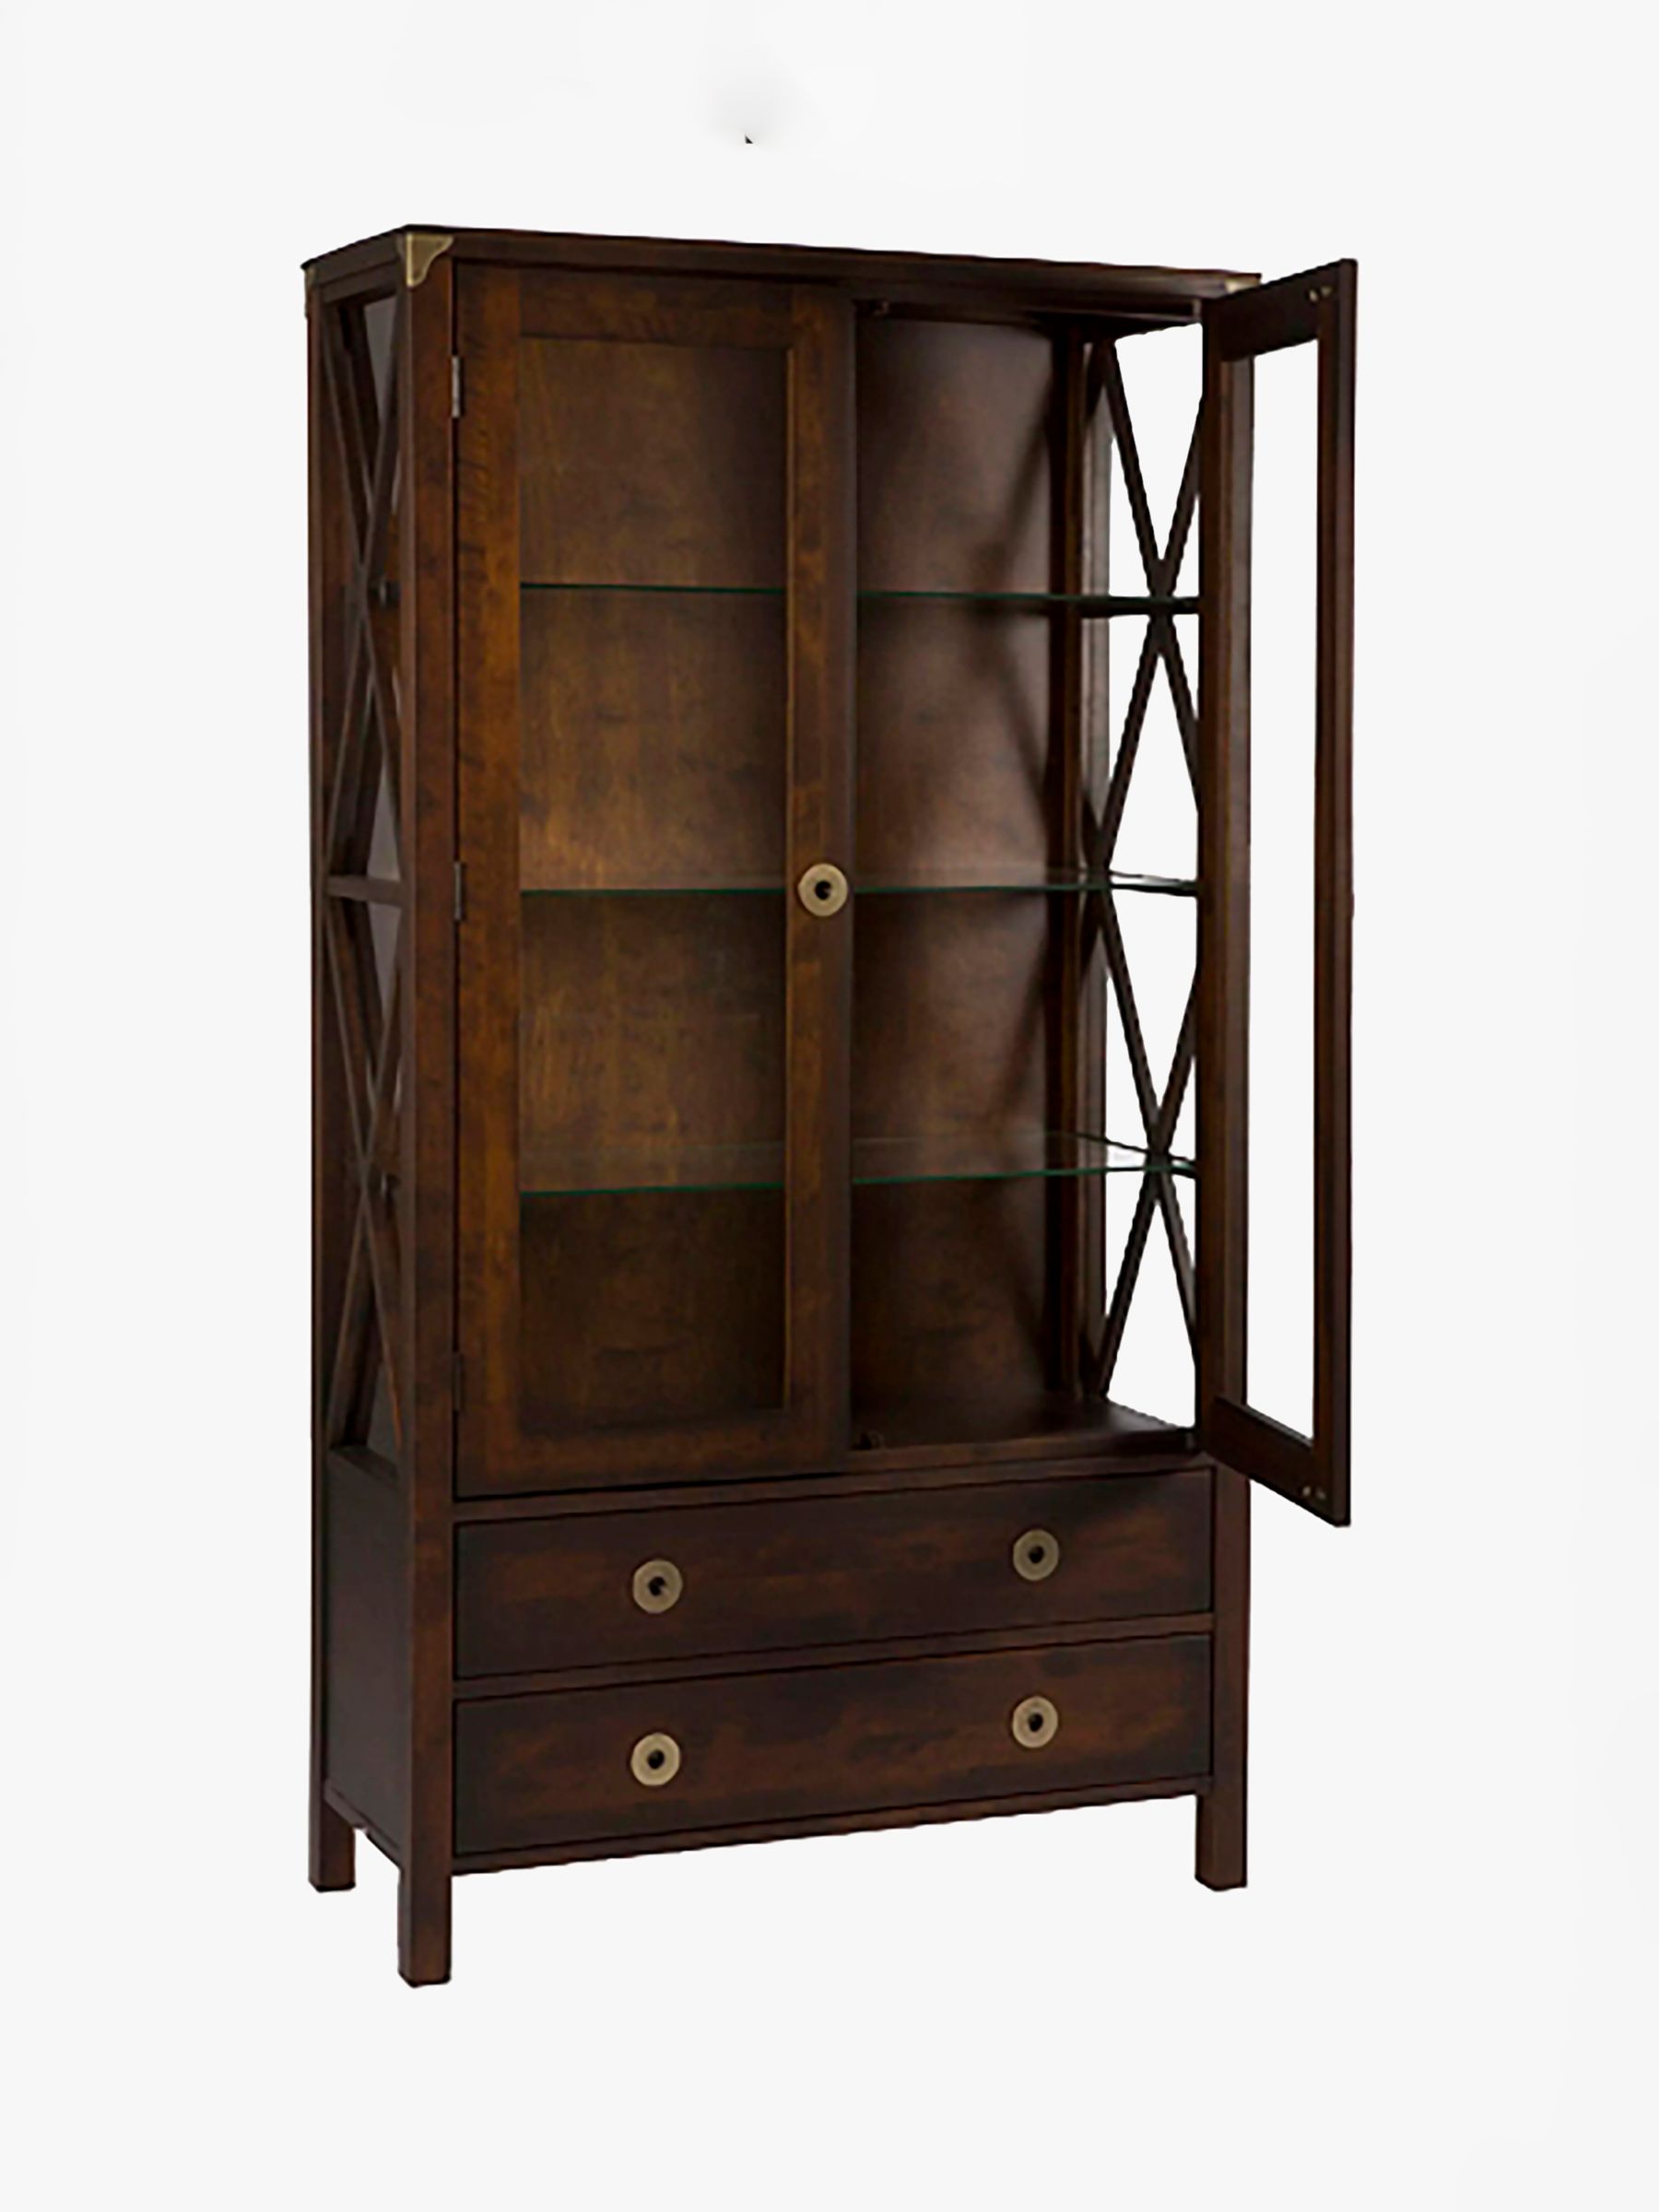 Photo of Laura ashley balmoral display storage cabinet chestnut brown